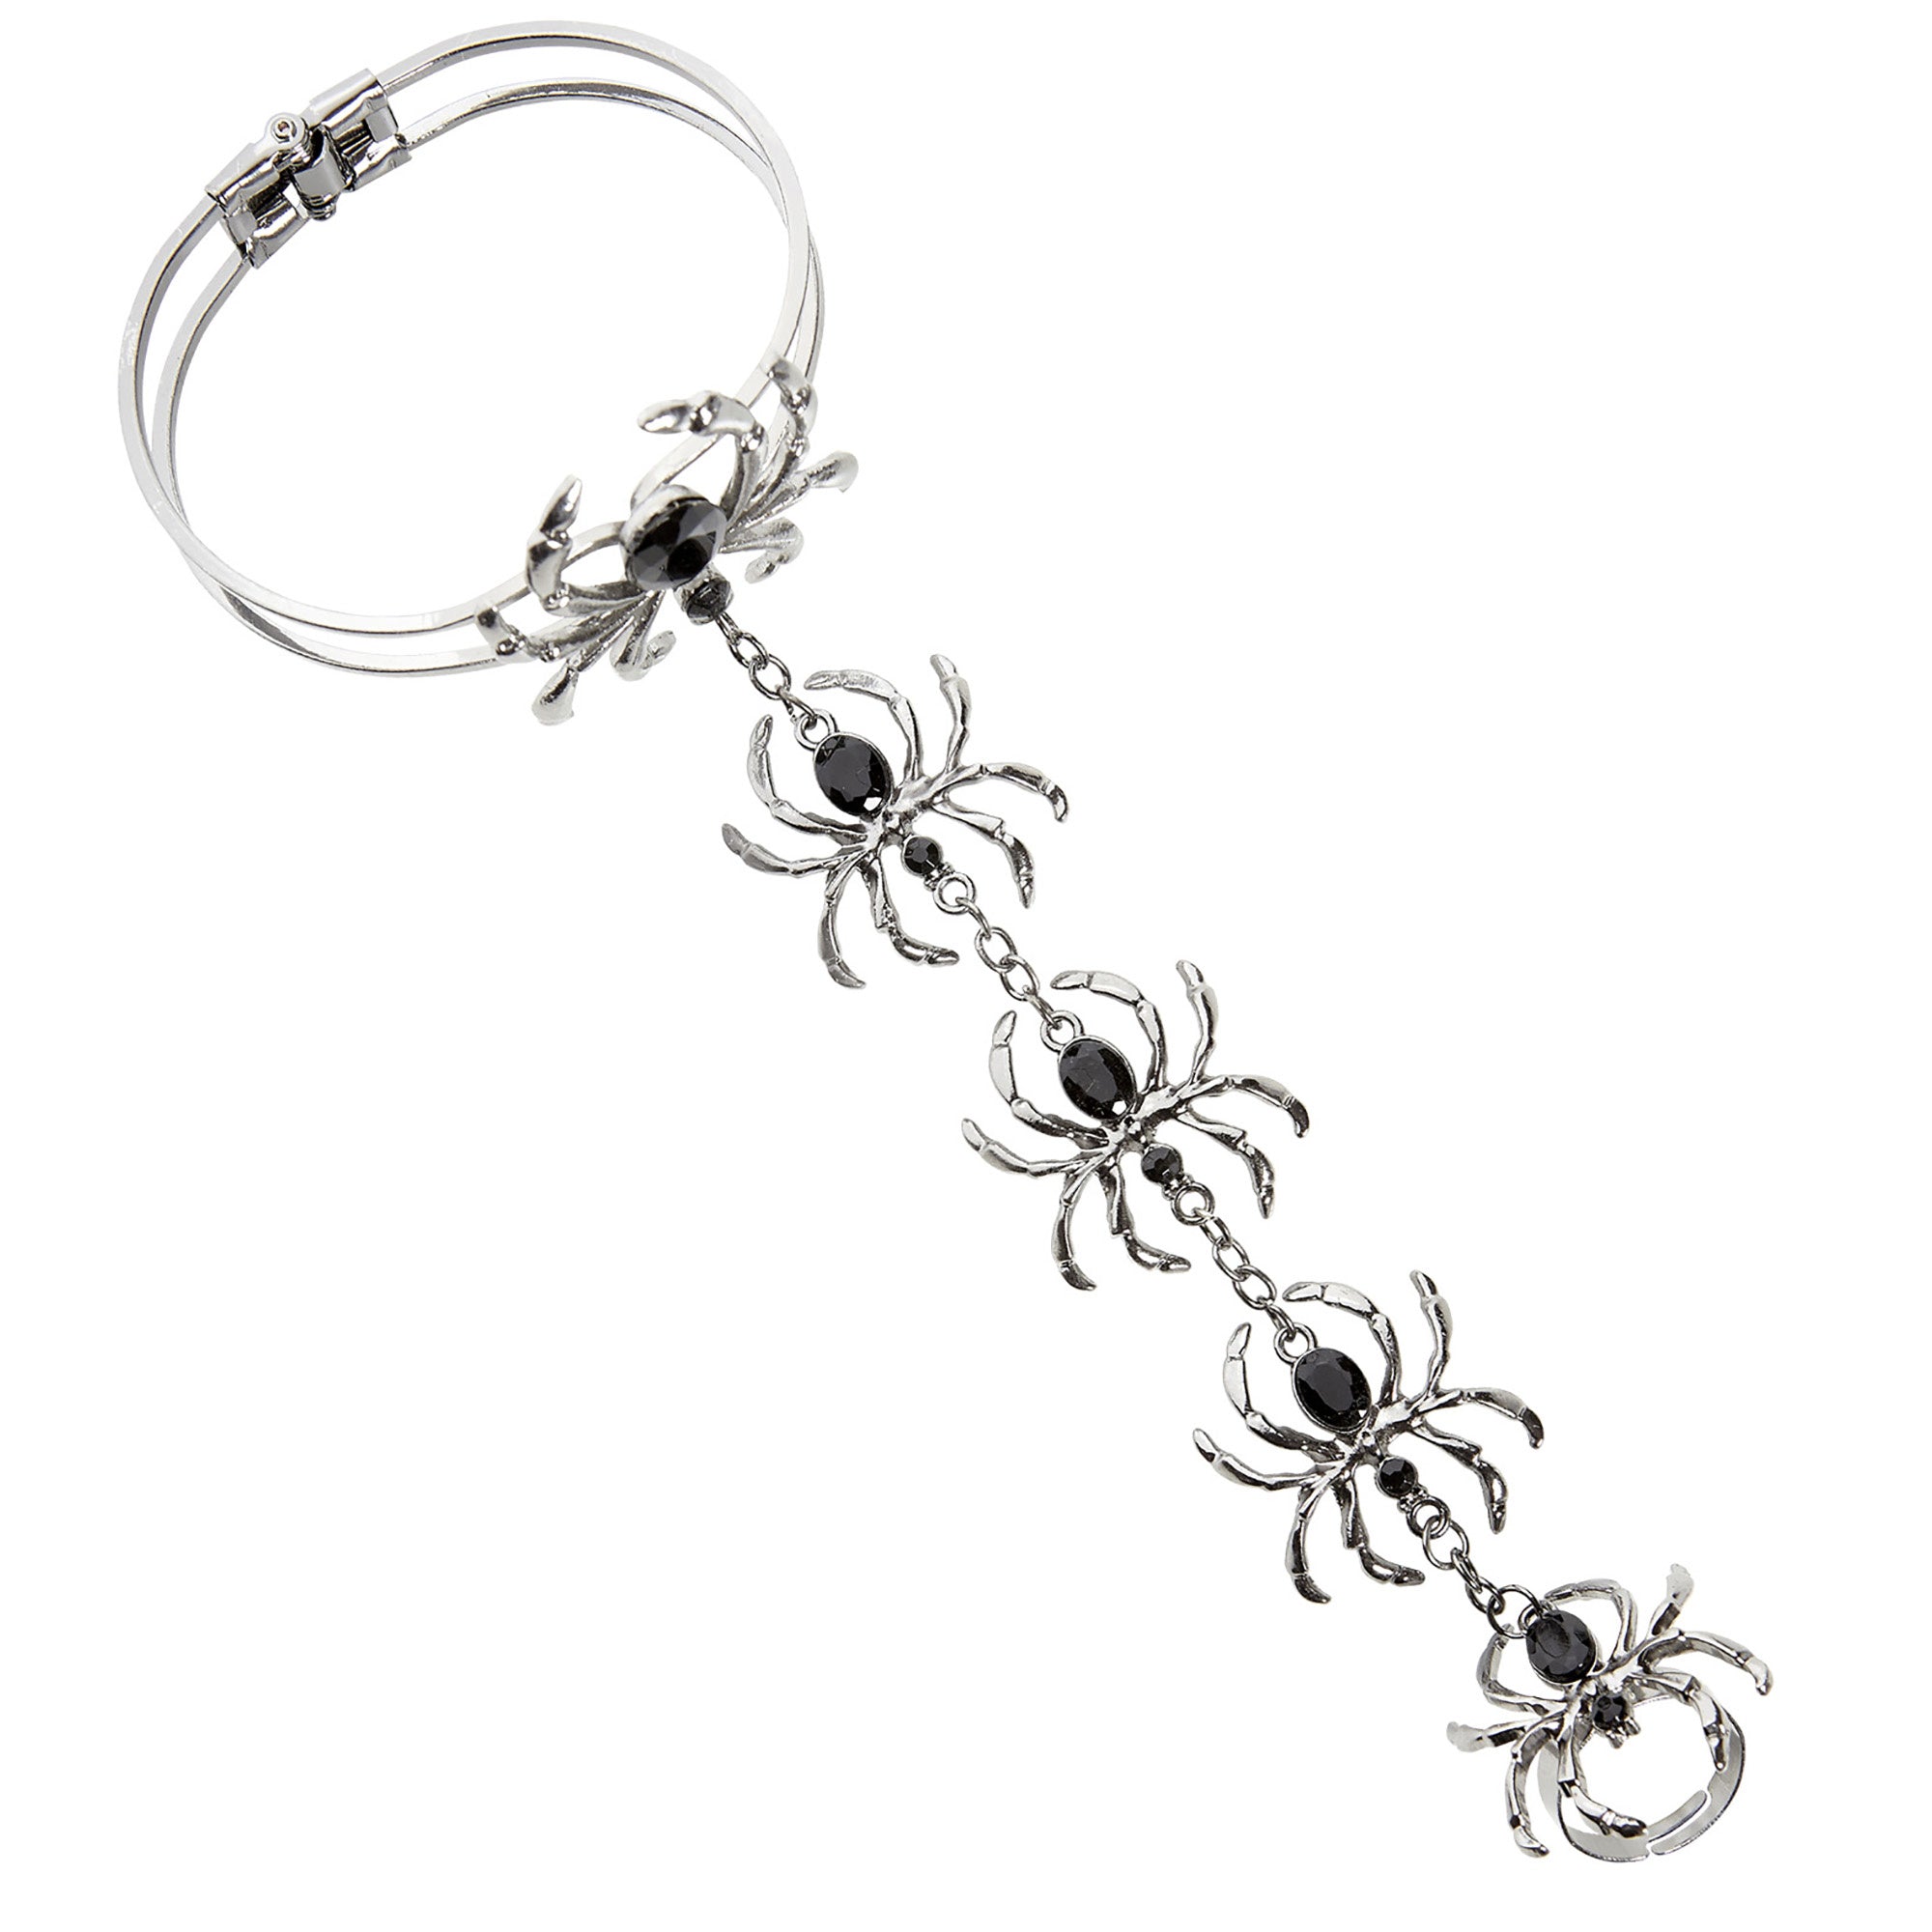 WIDMANN - Spinnen armband en ring voor vrouwen - Accessoires > Sieraden